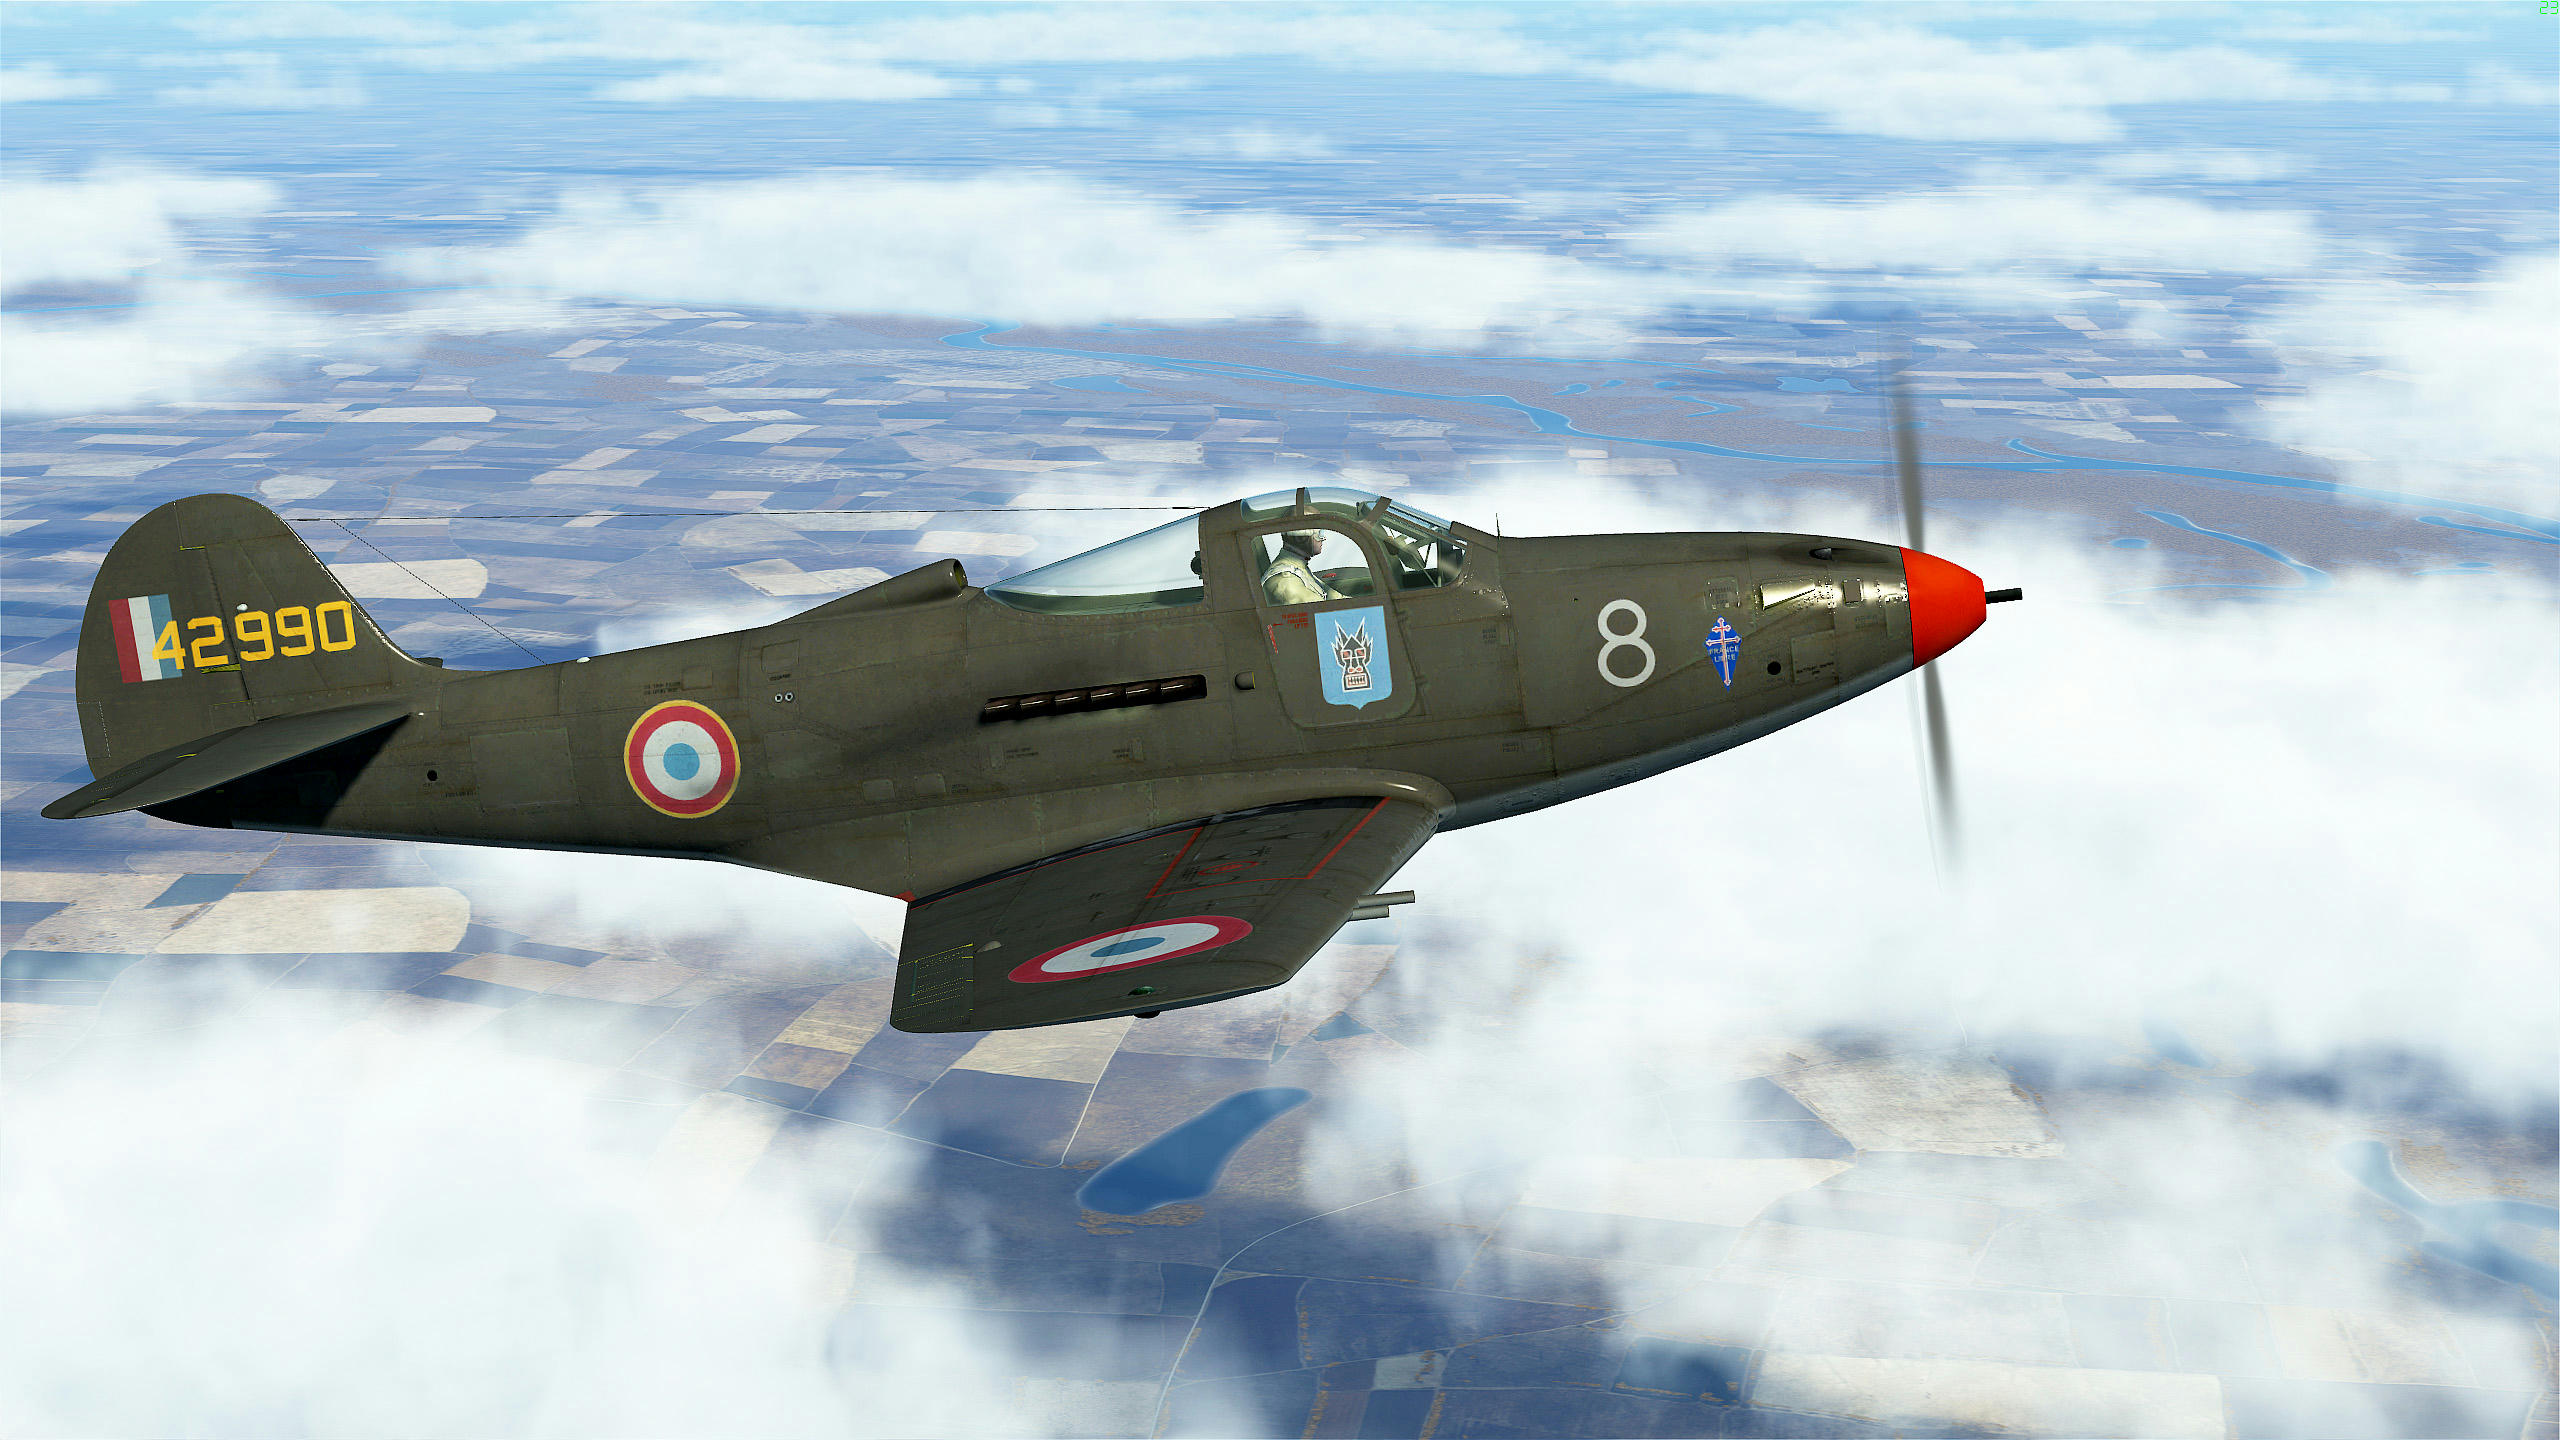 PACK P-39 FRANCAIS Vd13kty68zijy94zg